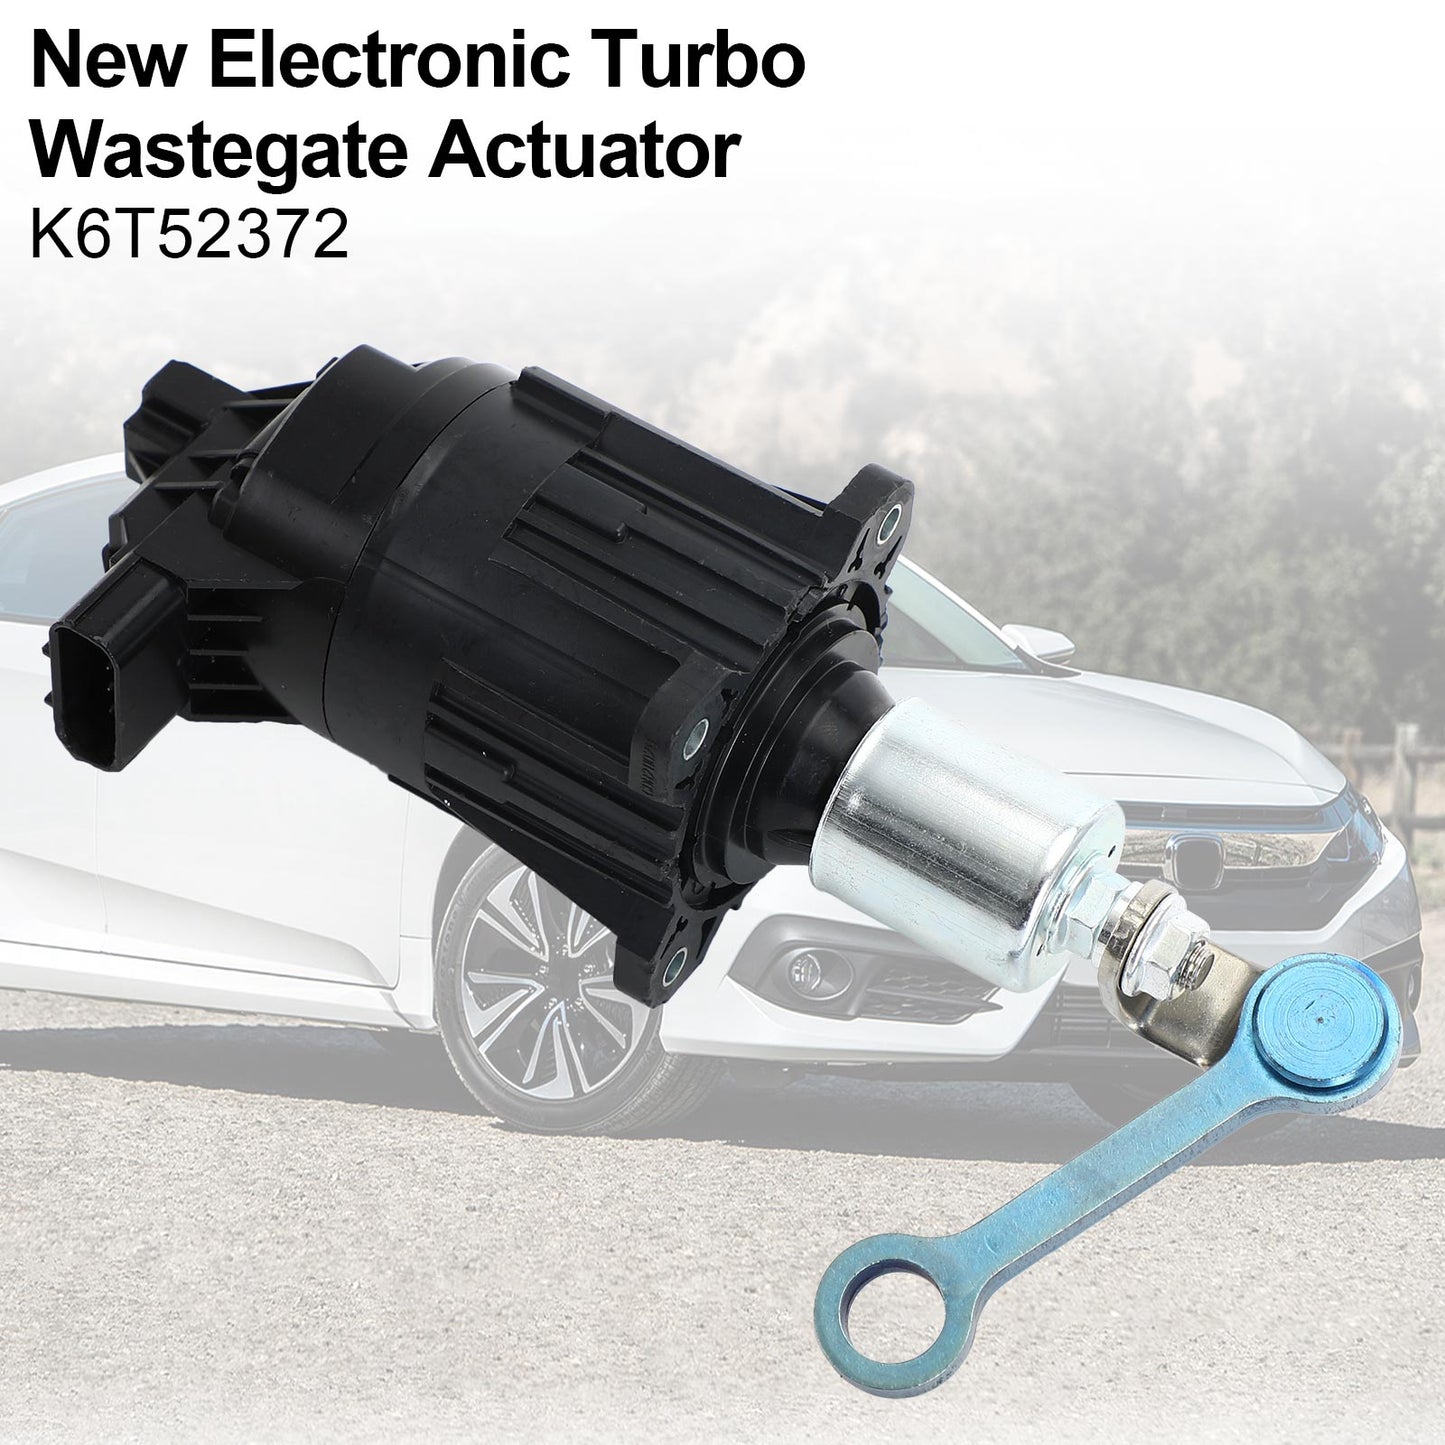 New Electronic Turbo Wastegate Actuator for Honda Civic 1.5L 2016-2019 K6T52372